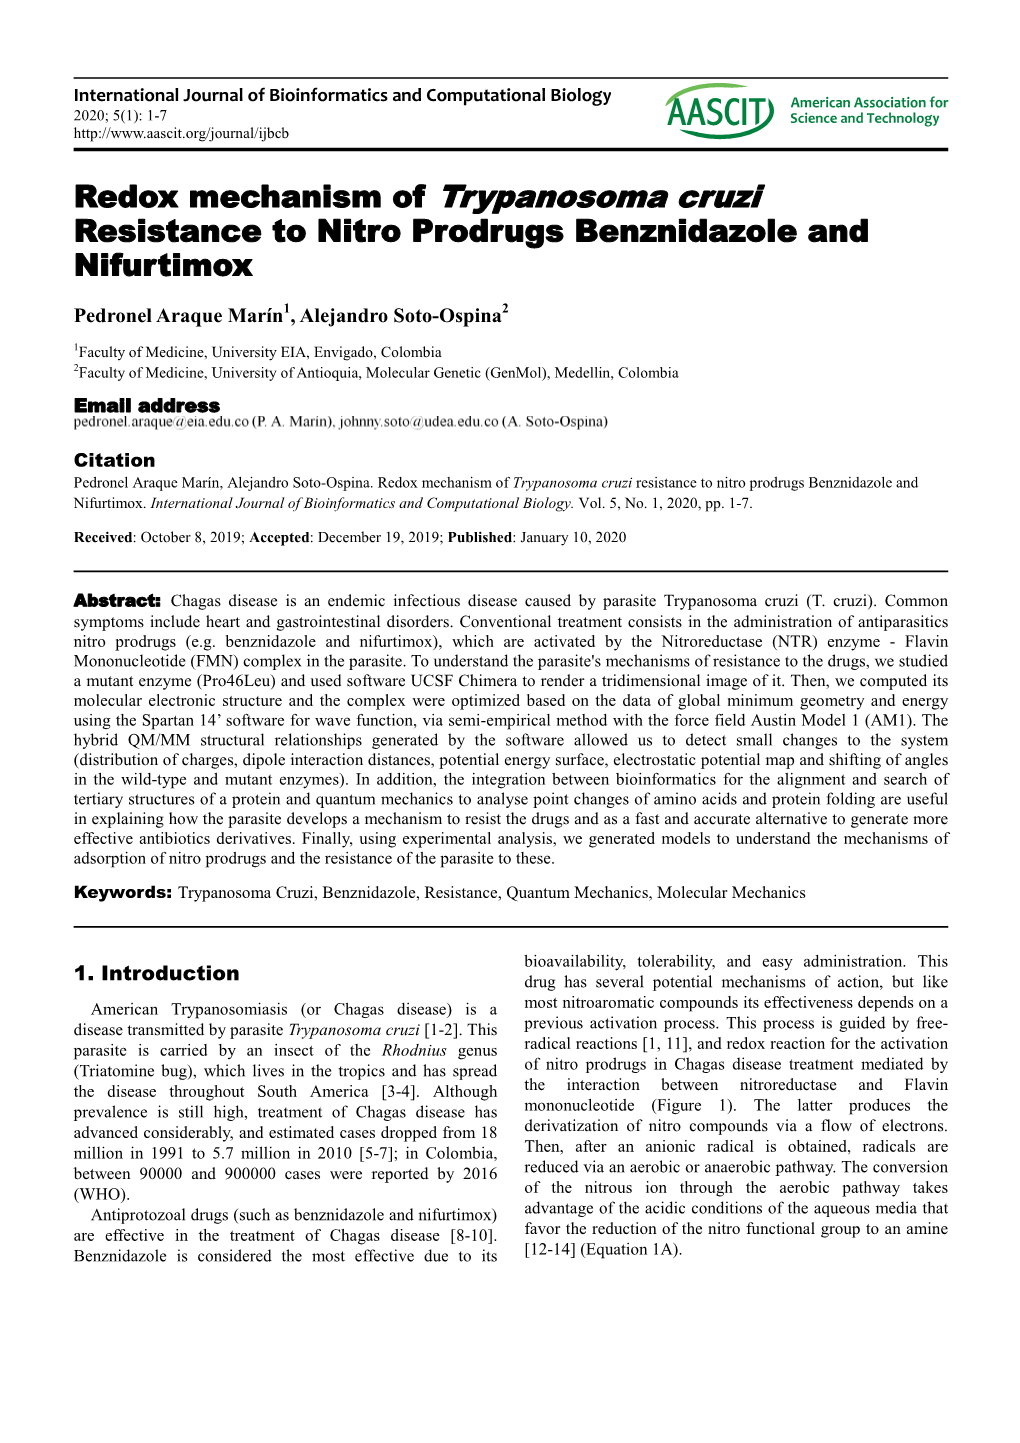 Redox Mechanism of Trypanosoma Cruzi Resistance to Nitro Prodrugs Benznidazole and Nifurtimox